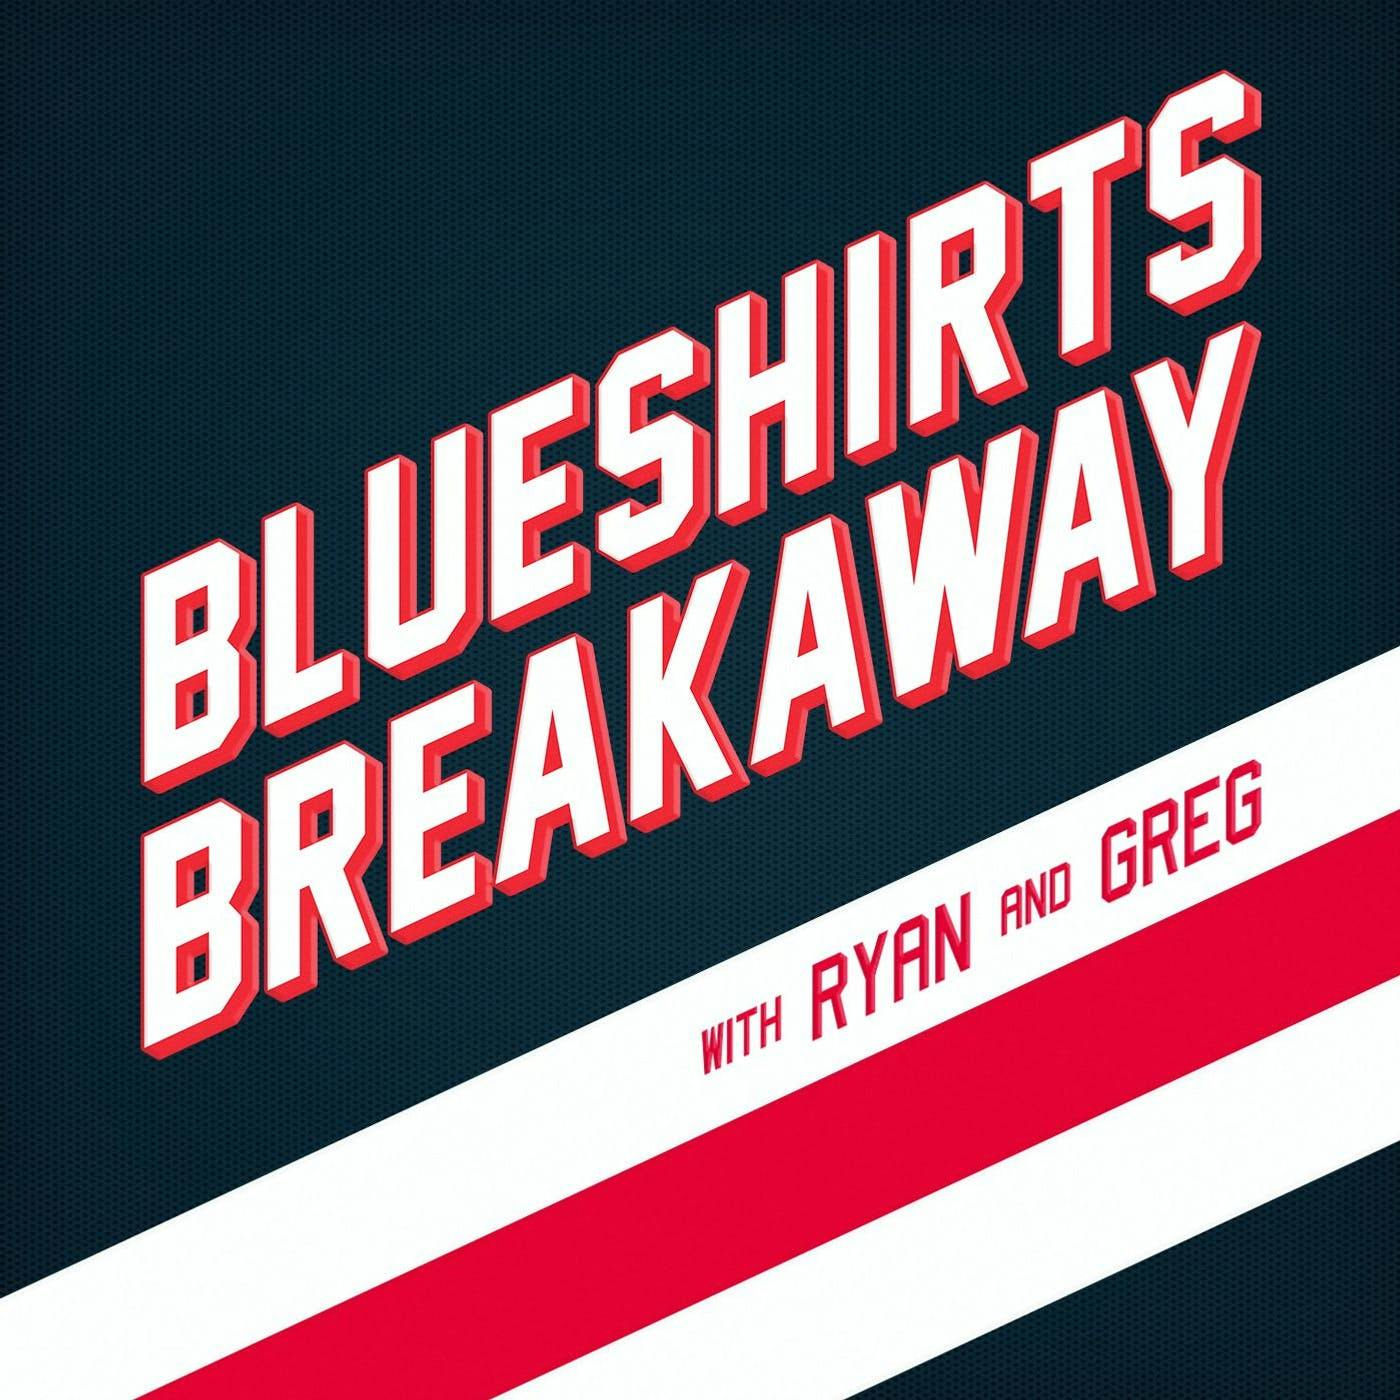 Blueshirts Breakaway EP 40 - Have We Seen the Last of Olympic Hockey?